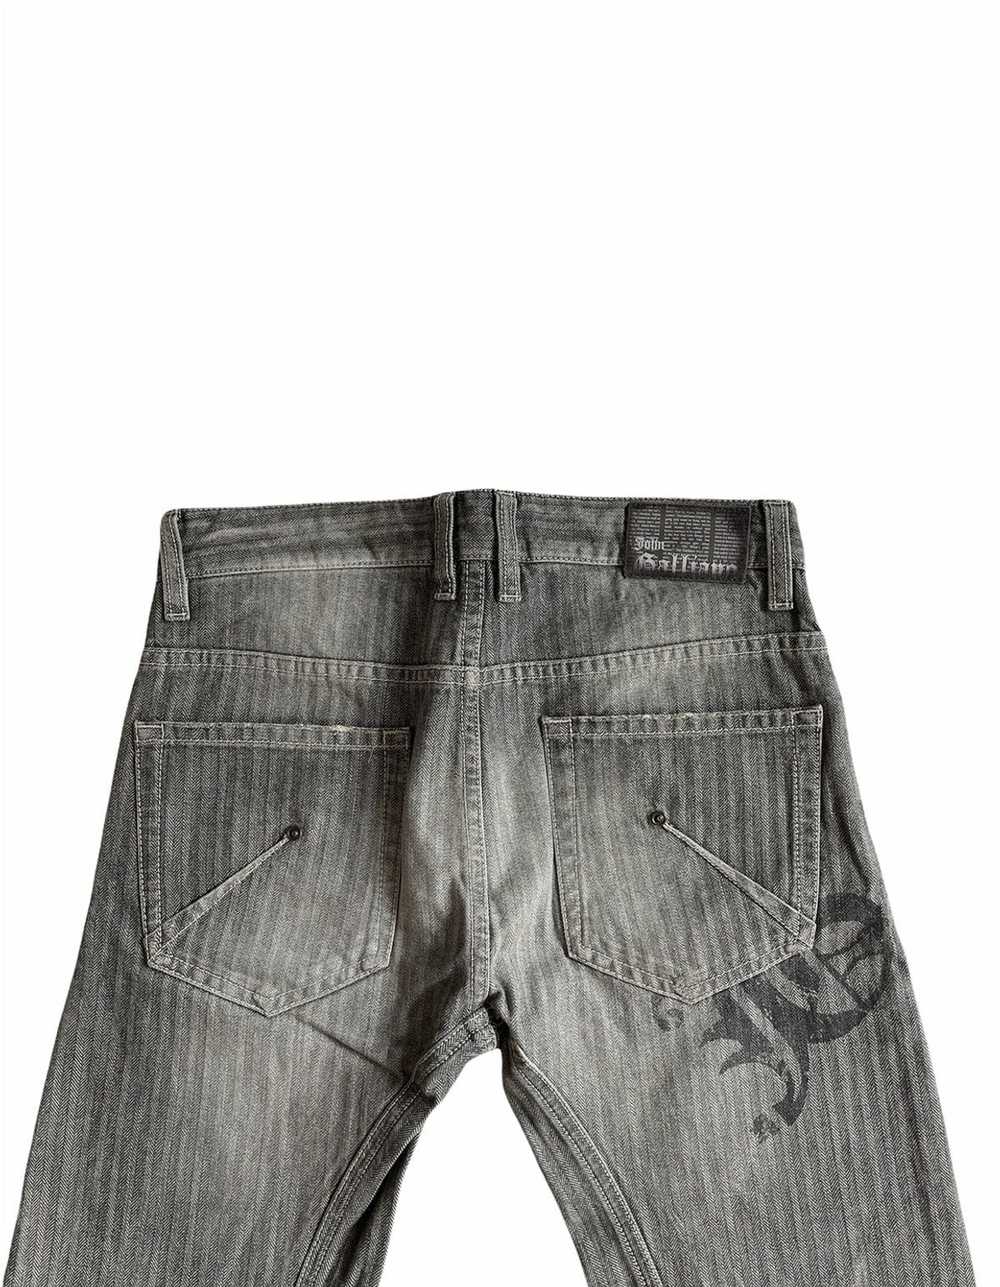 John Galliano John Galliano jeans rare - image 1